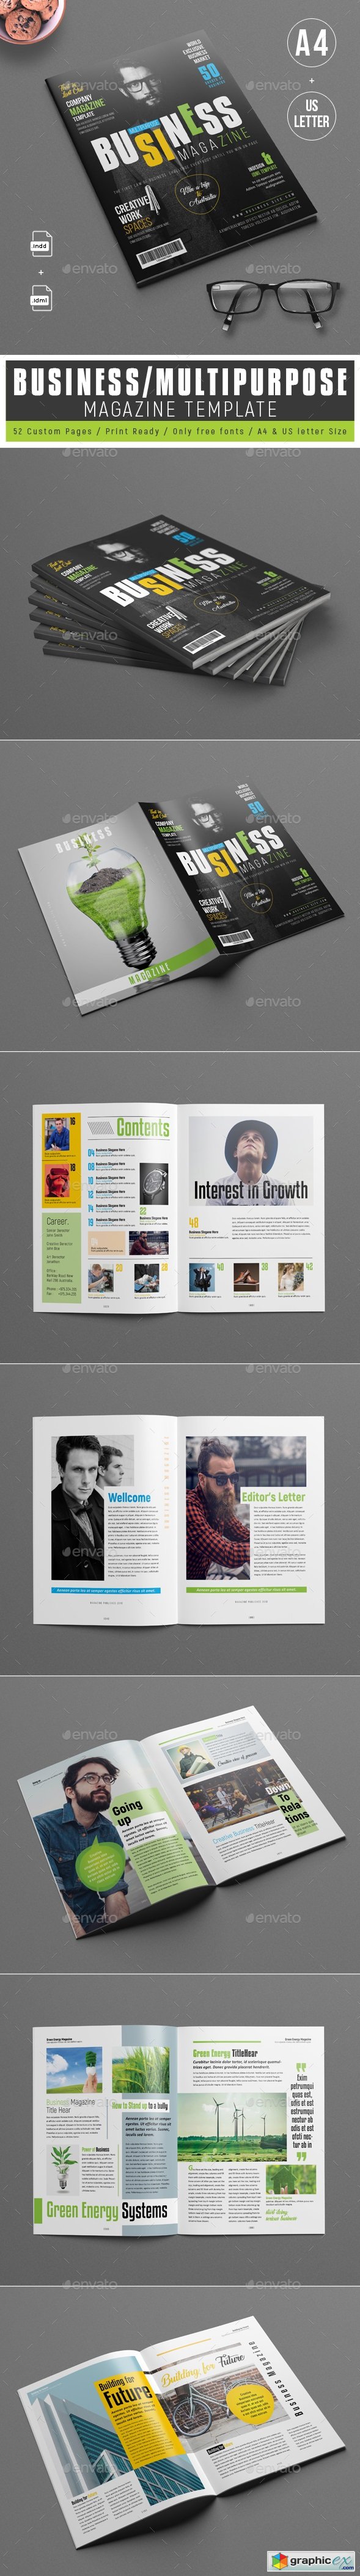 Business/Multipurpose Magazine Template